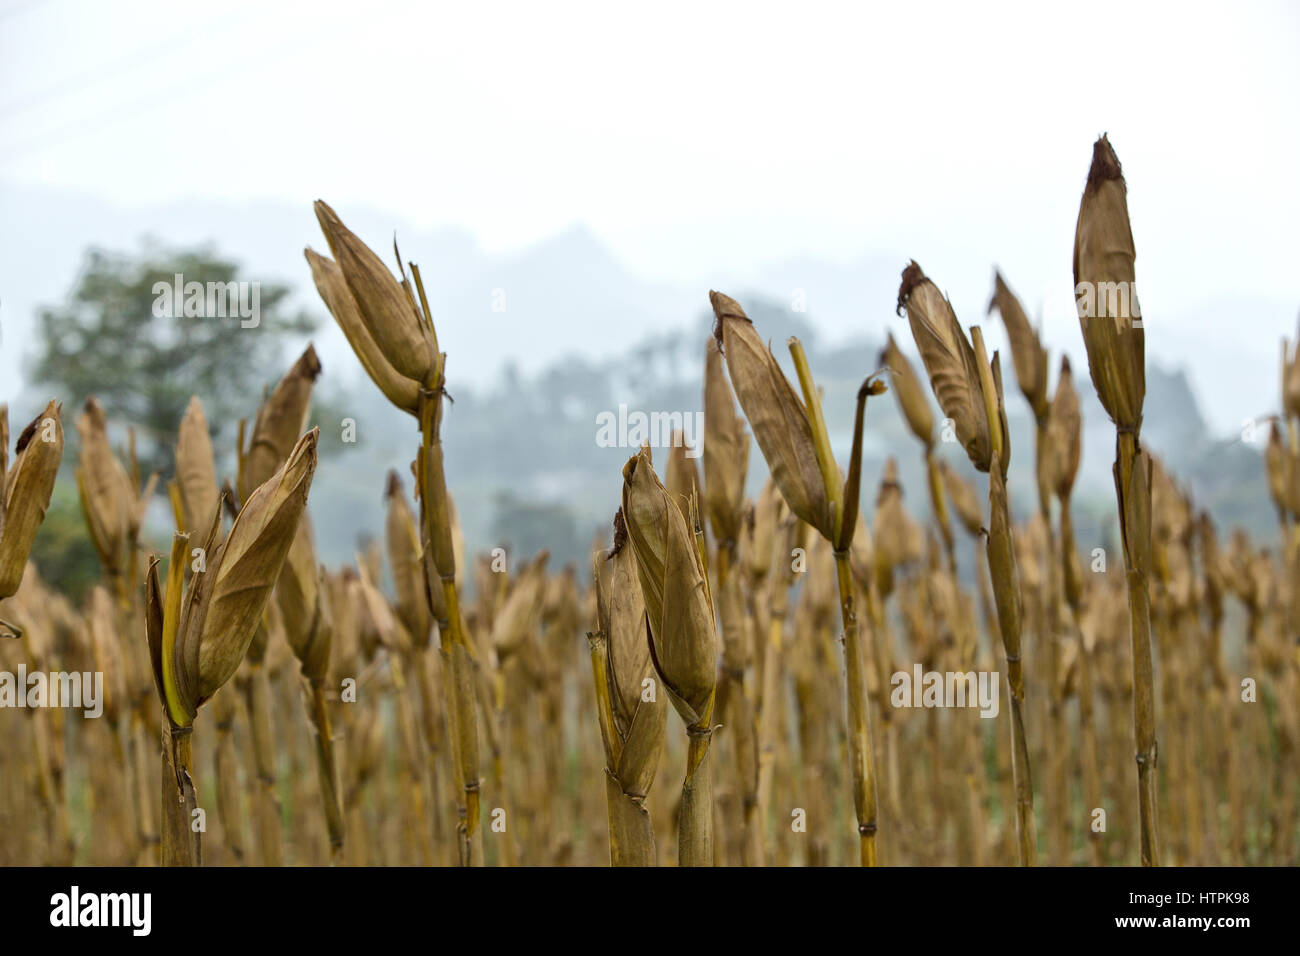 Corn field, drying stalks with husk, Zea mays, Poaceae family, moddy sky, Bac Ha vicinity. Stock Photo